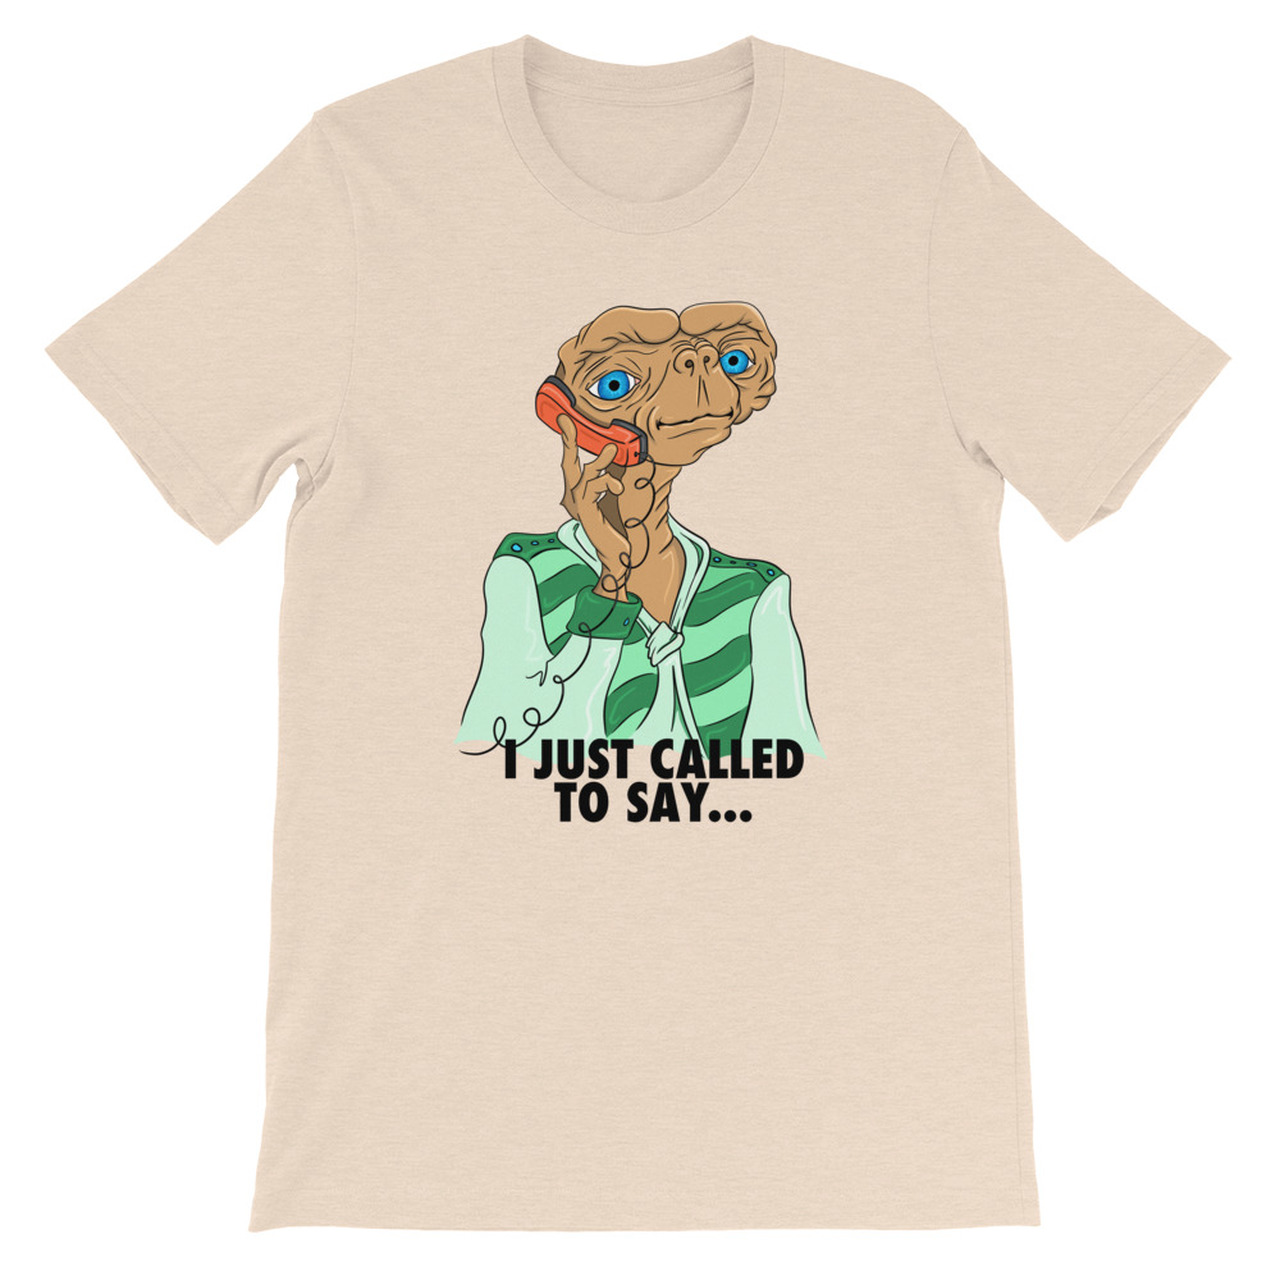 Stevie Wonder and E.T. Mashup Music and Movie T-shirt 